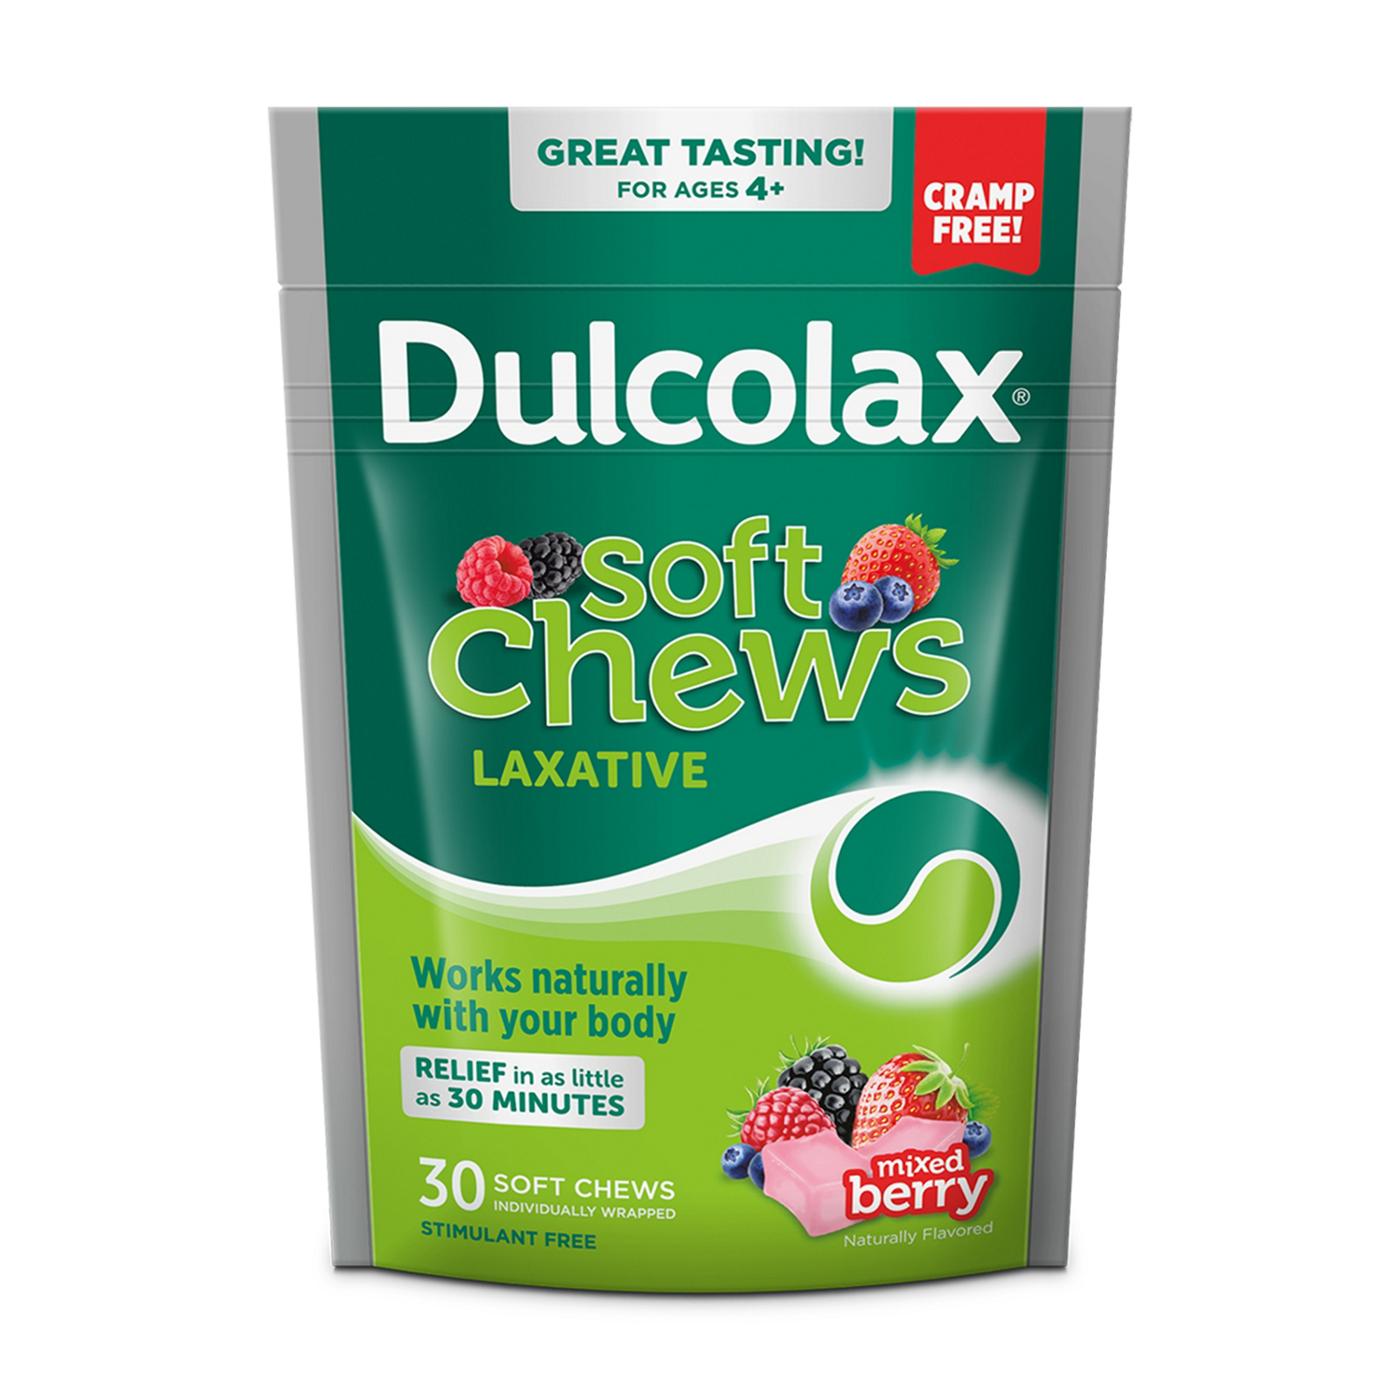 Dulcolax Soft Chews Laxative Mixed Berry; image 1 of 3